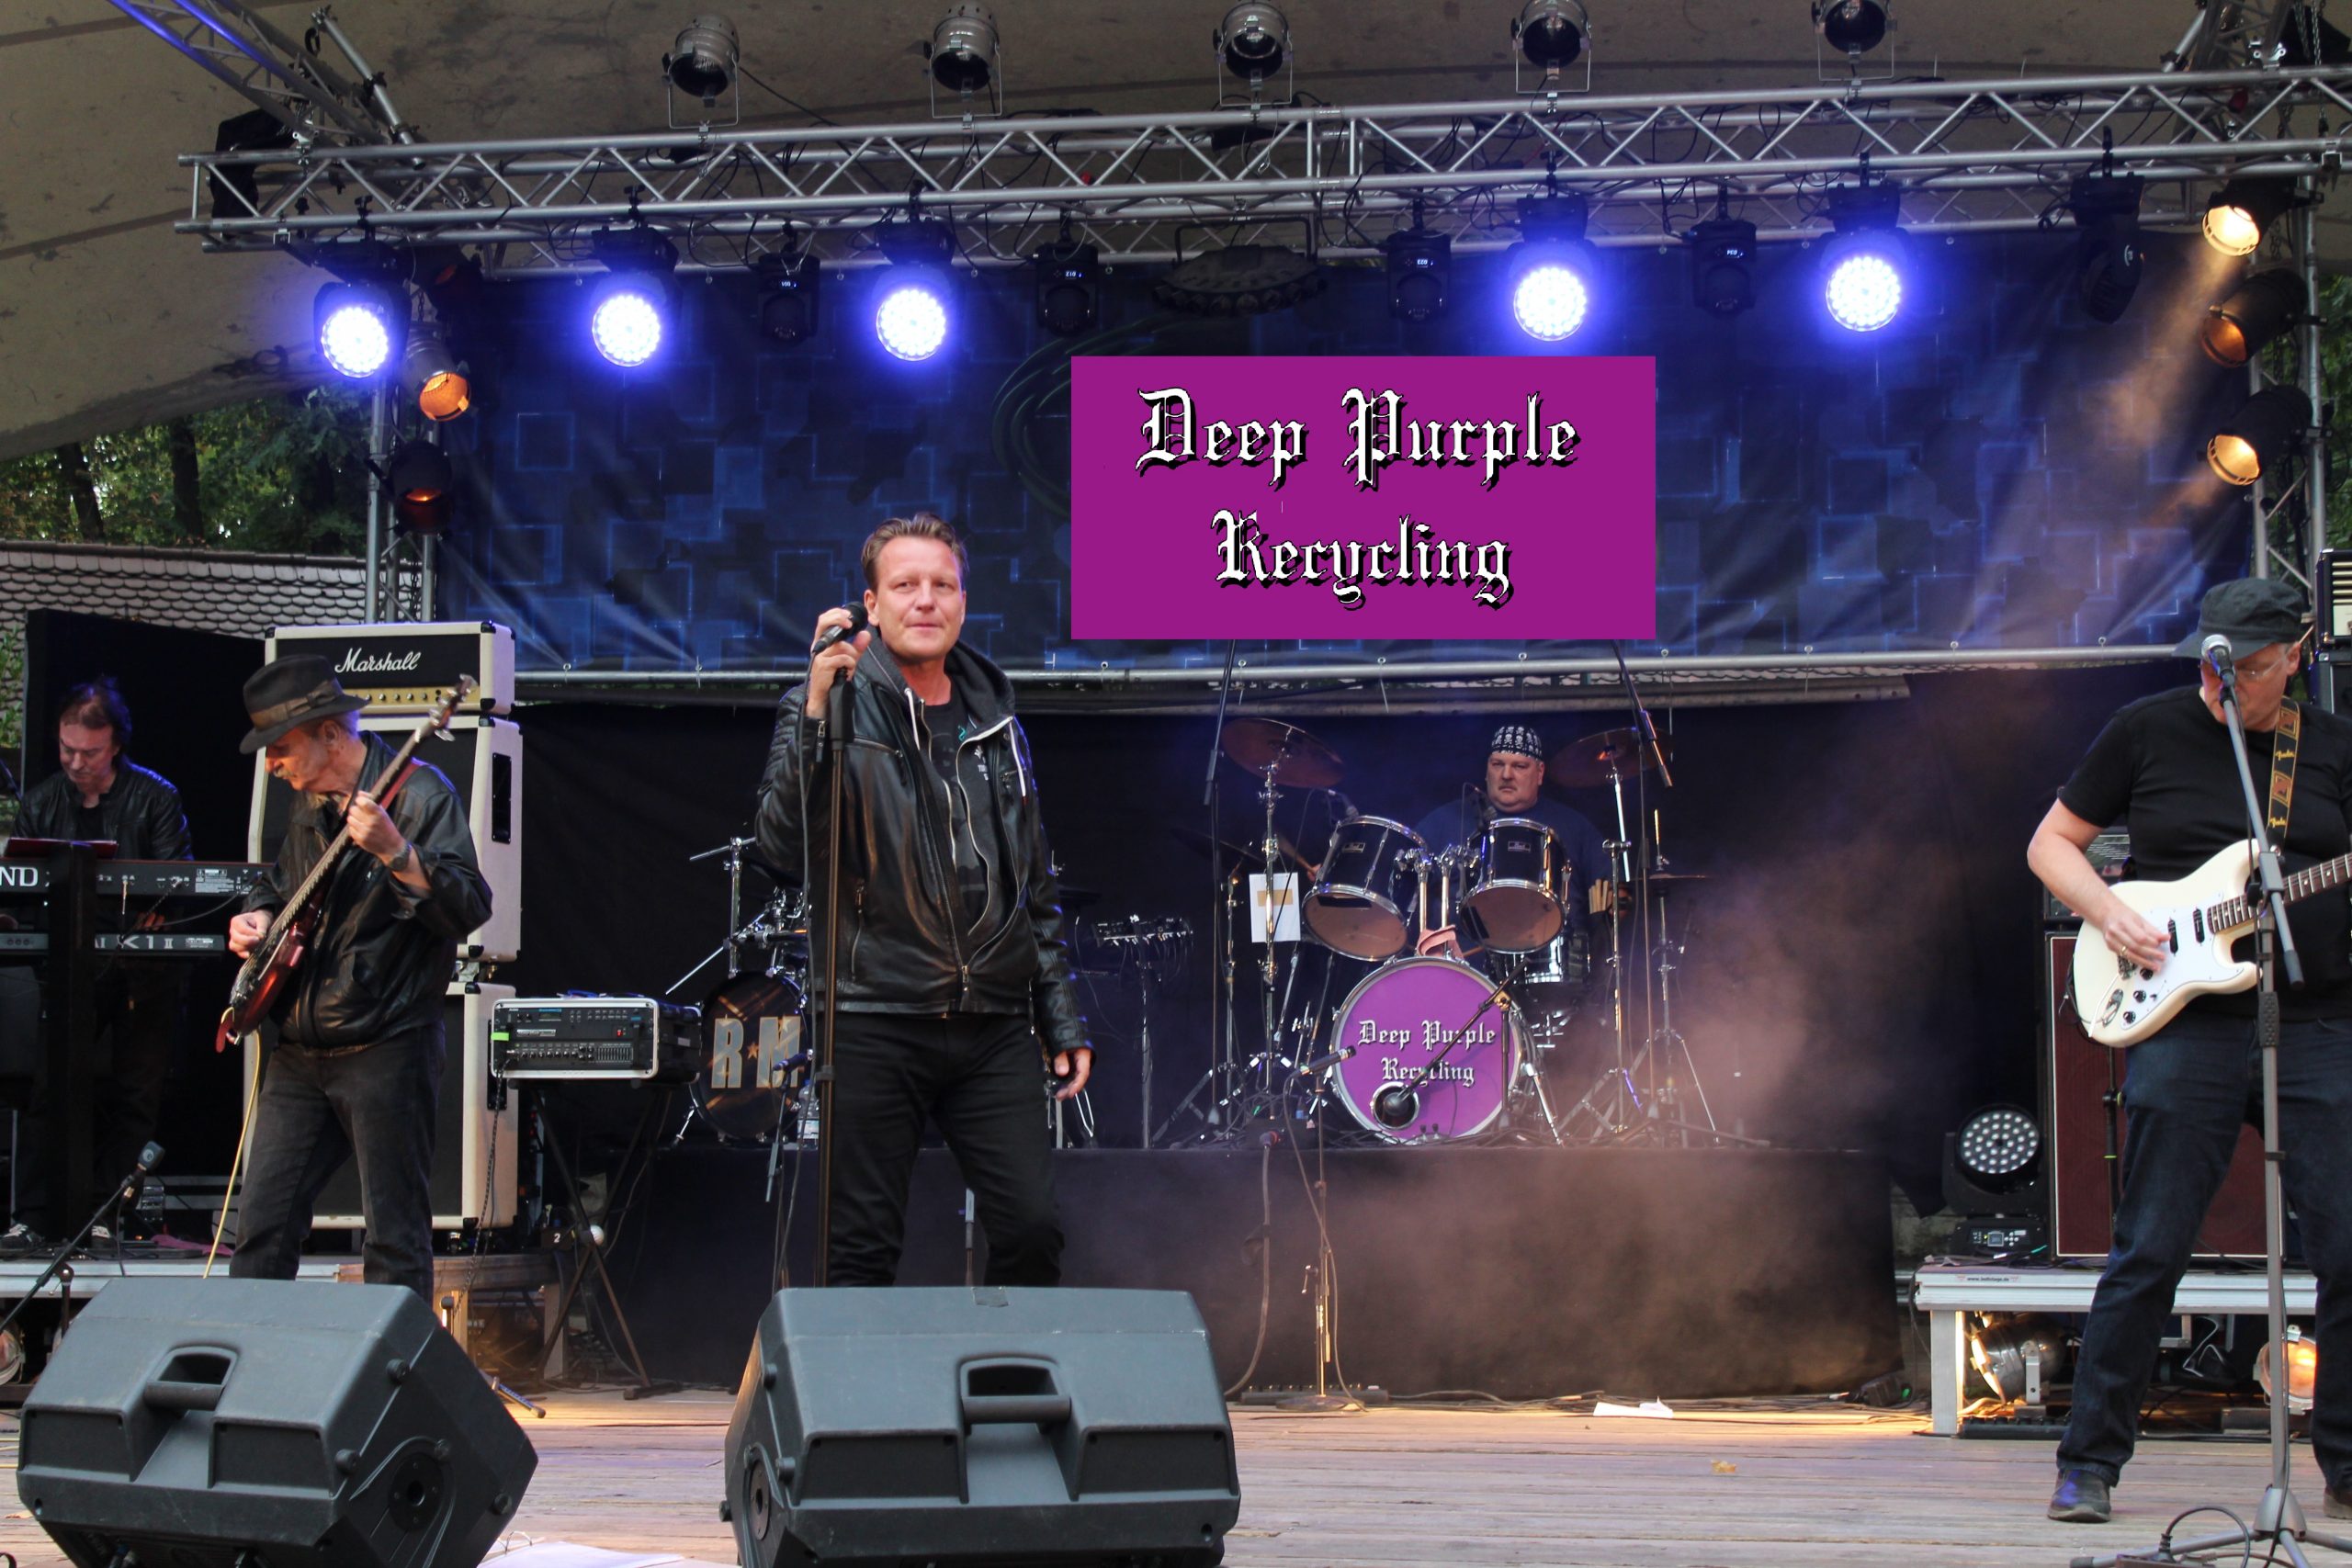 Deep Purple Recycling in Concert